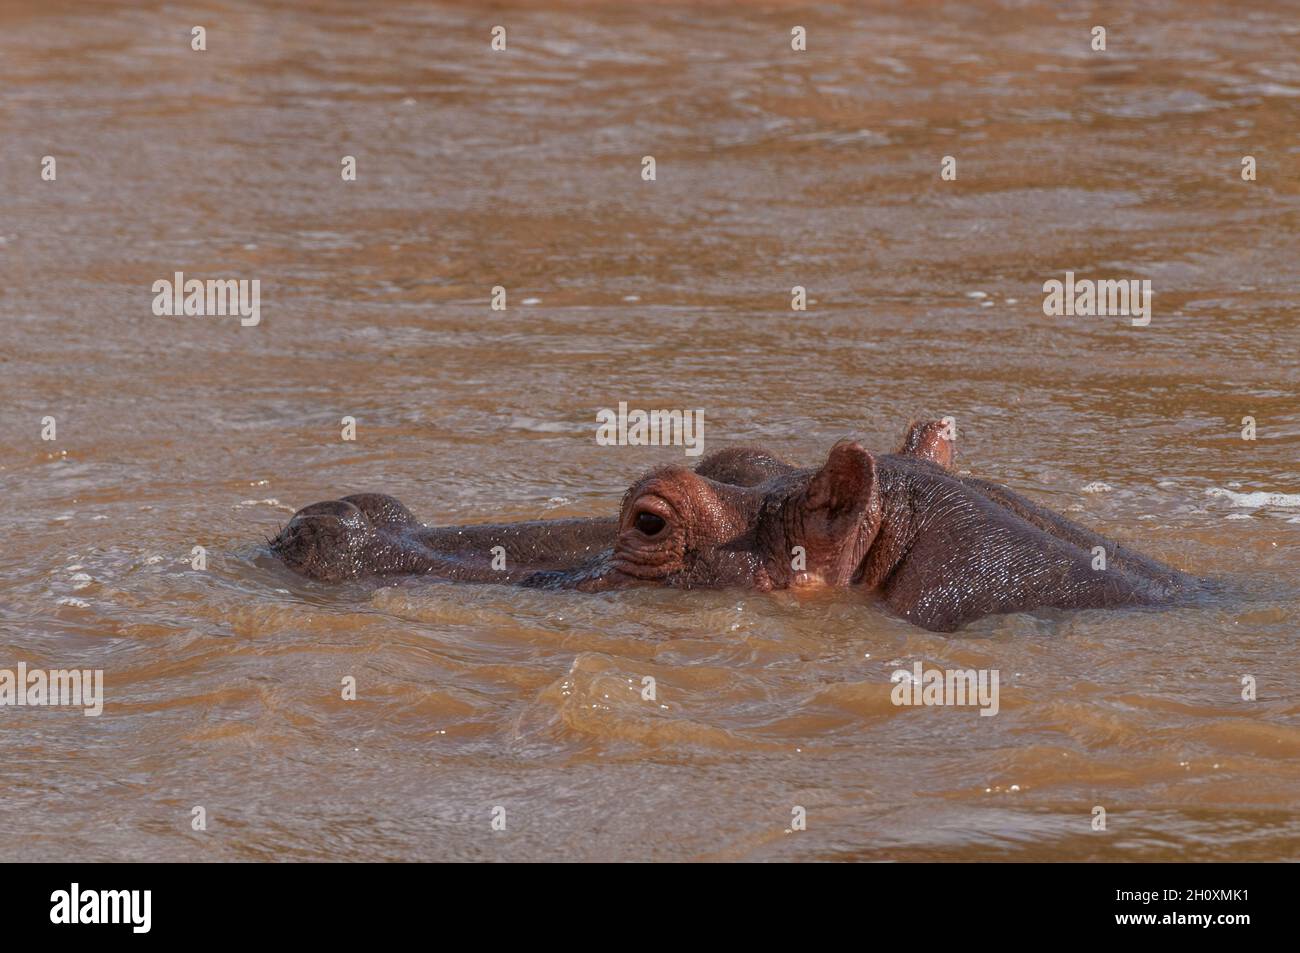 A hippopotamus, Hippopotamus amphibius, mostly submerged in muddy water. Galana River, Tsavo East National Park, Kenya. Stock Photo